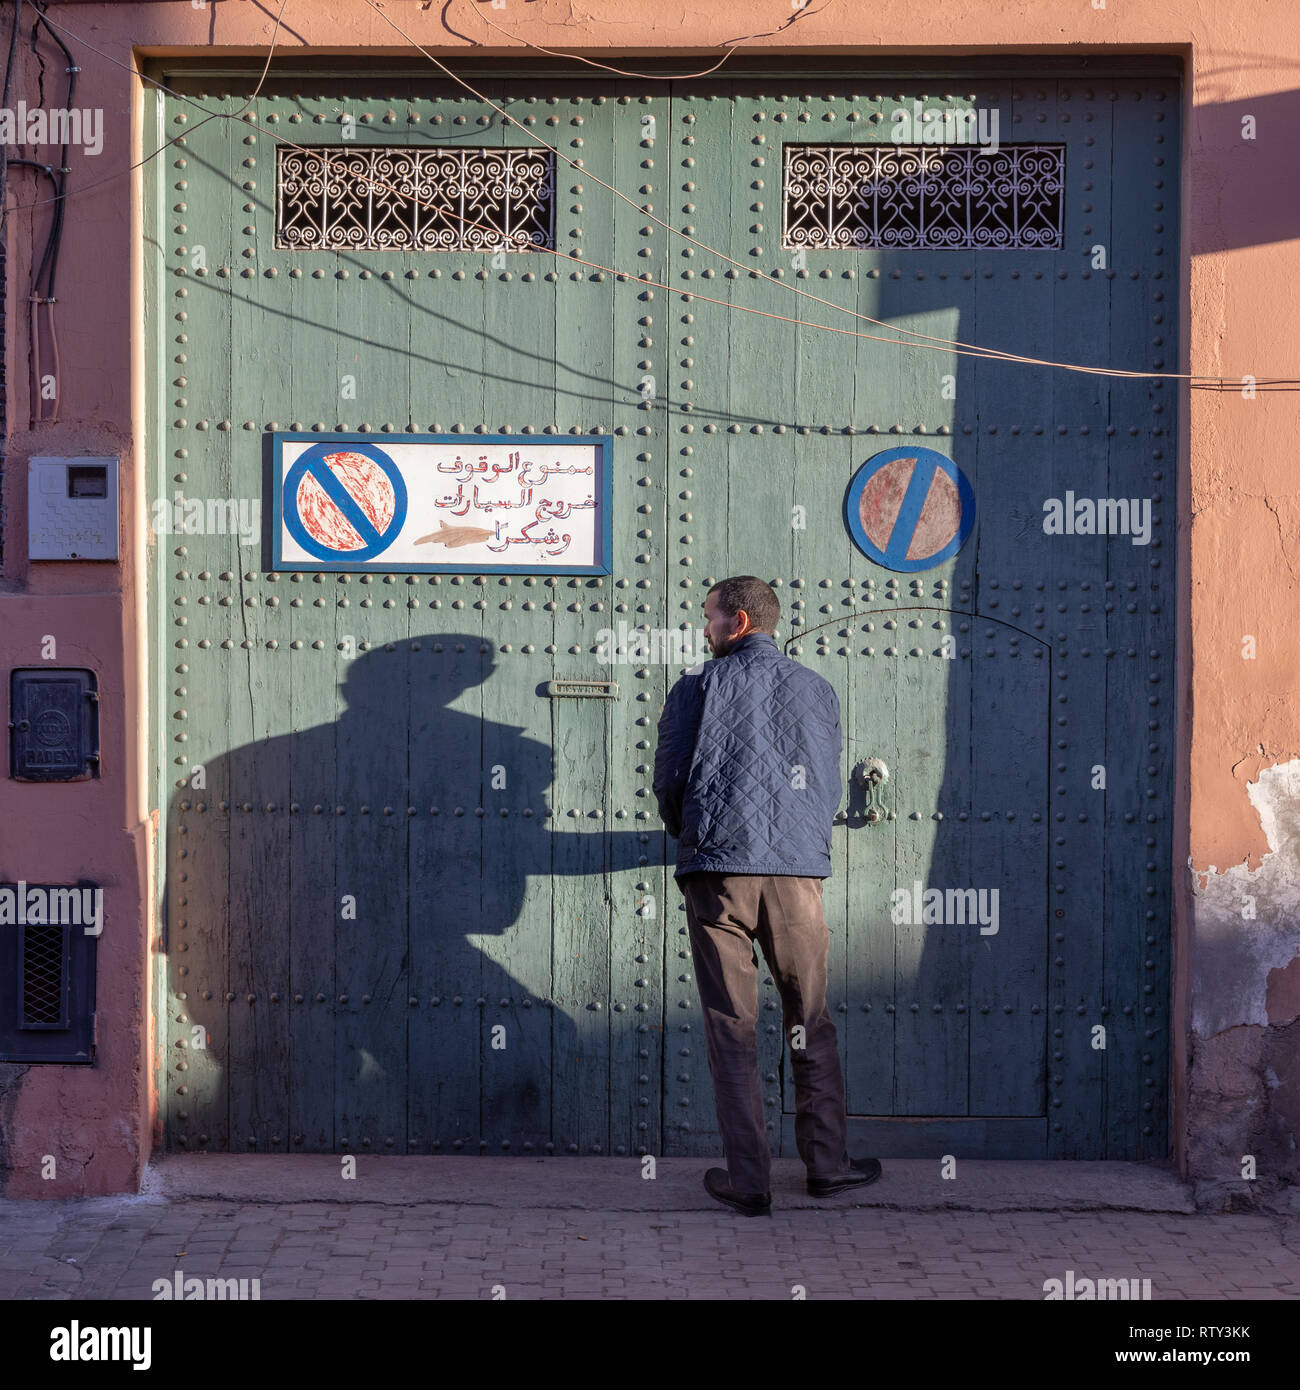 Man unlocking business in Marrakech medina Stock Photo